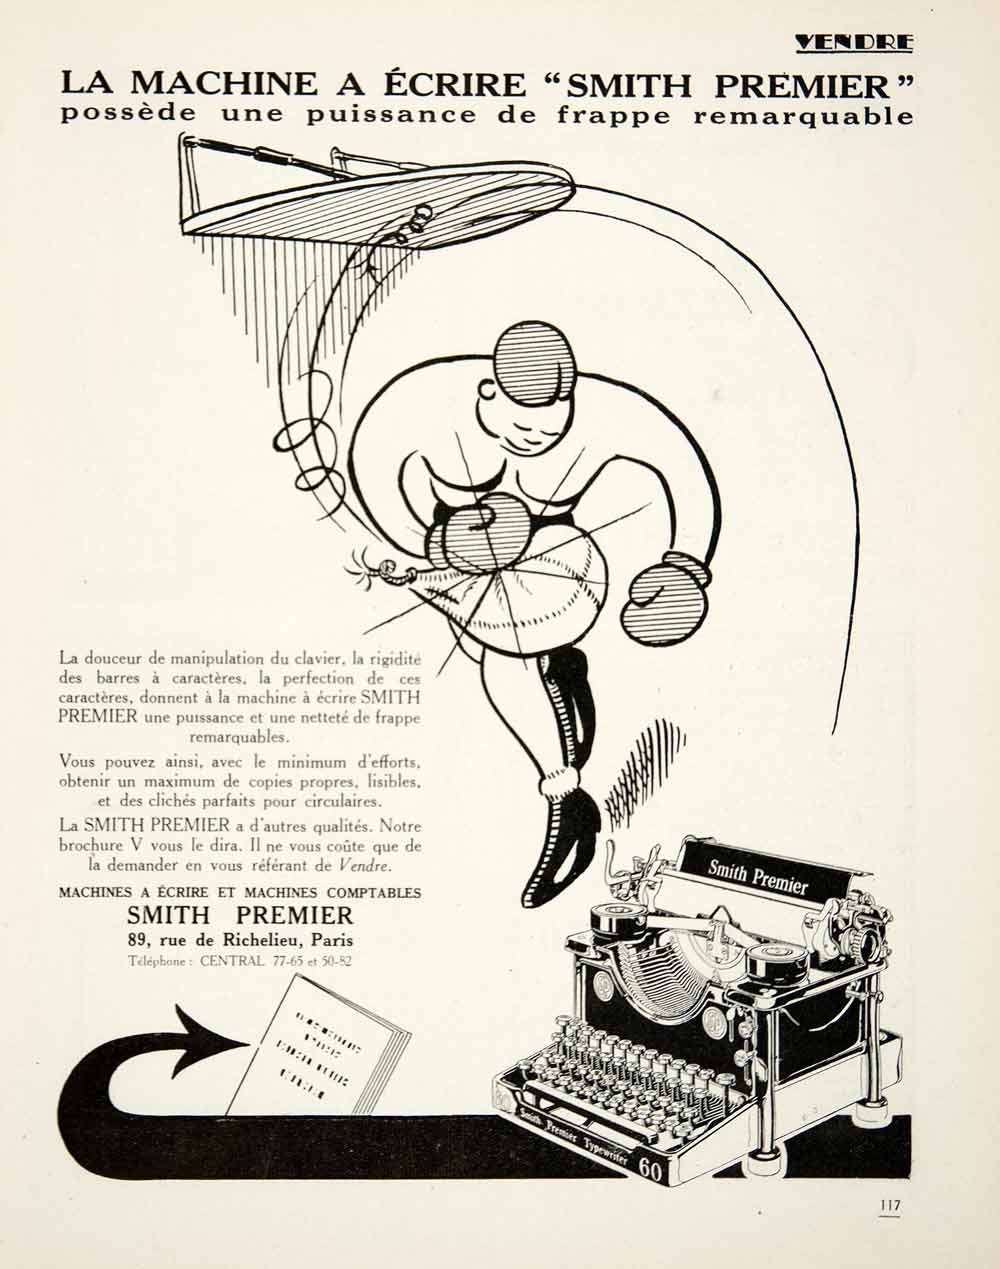 1926 Ad 60 Smith Premier Typewriter 89 rue Richelieu Paris Boxing Office VEN4